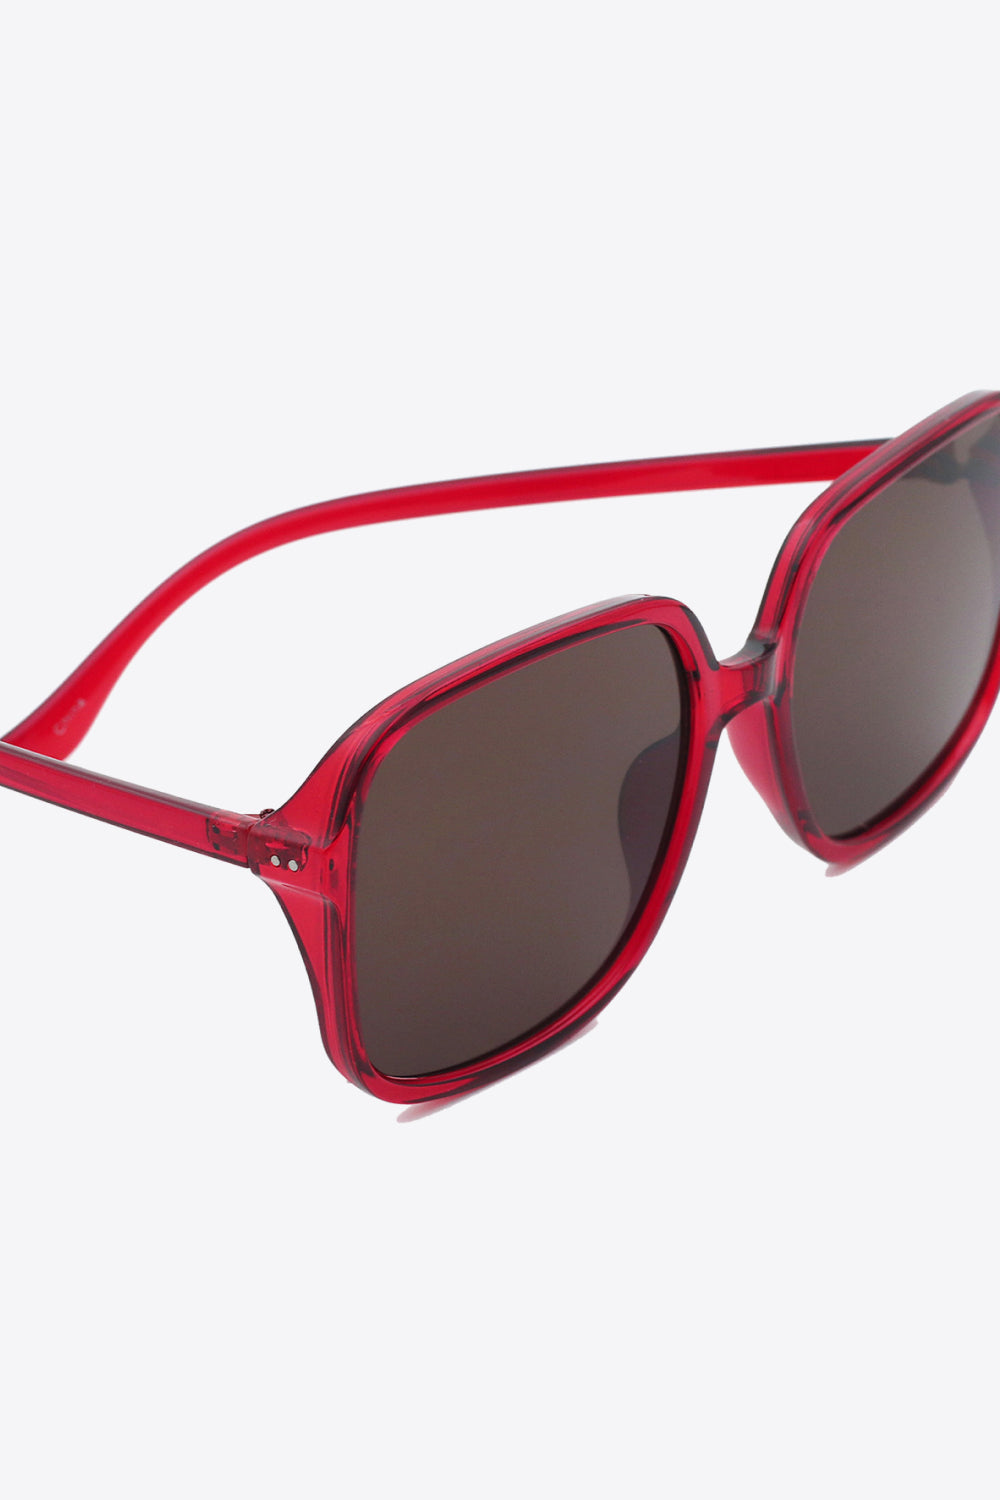 Sienna Polycarbonate Square Sunglasses Sunglasses